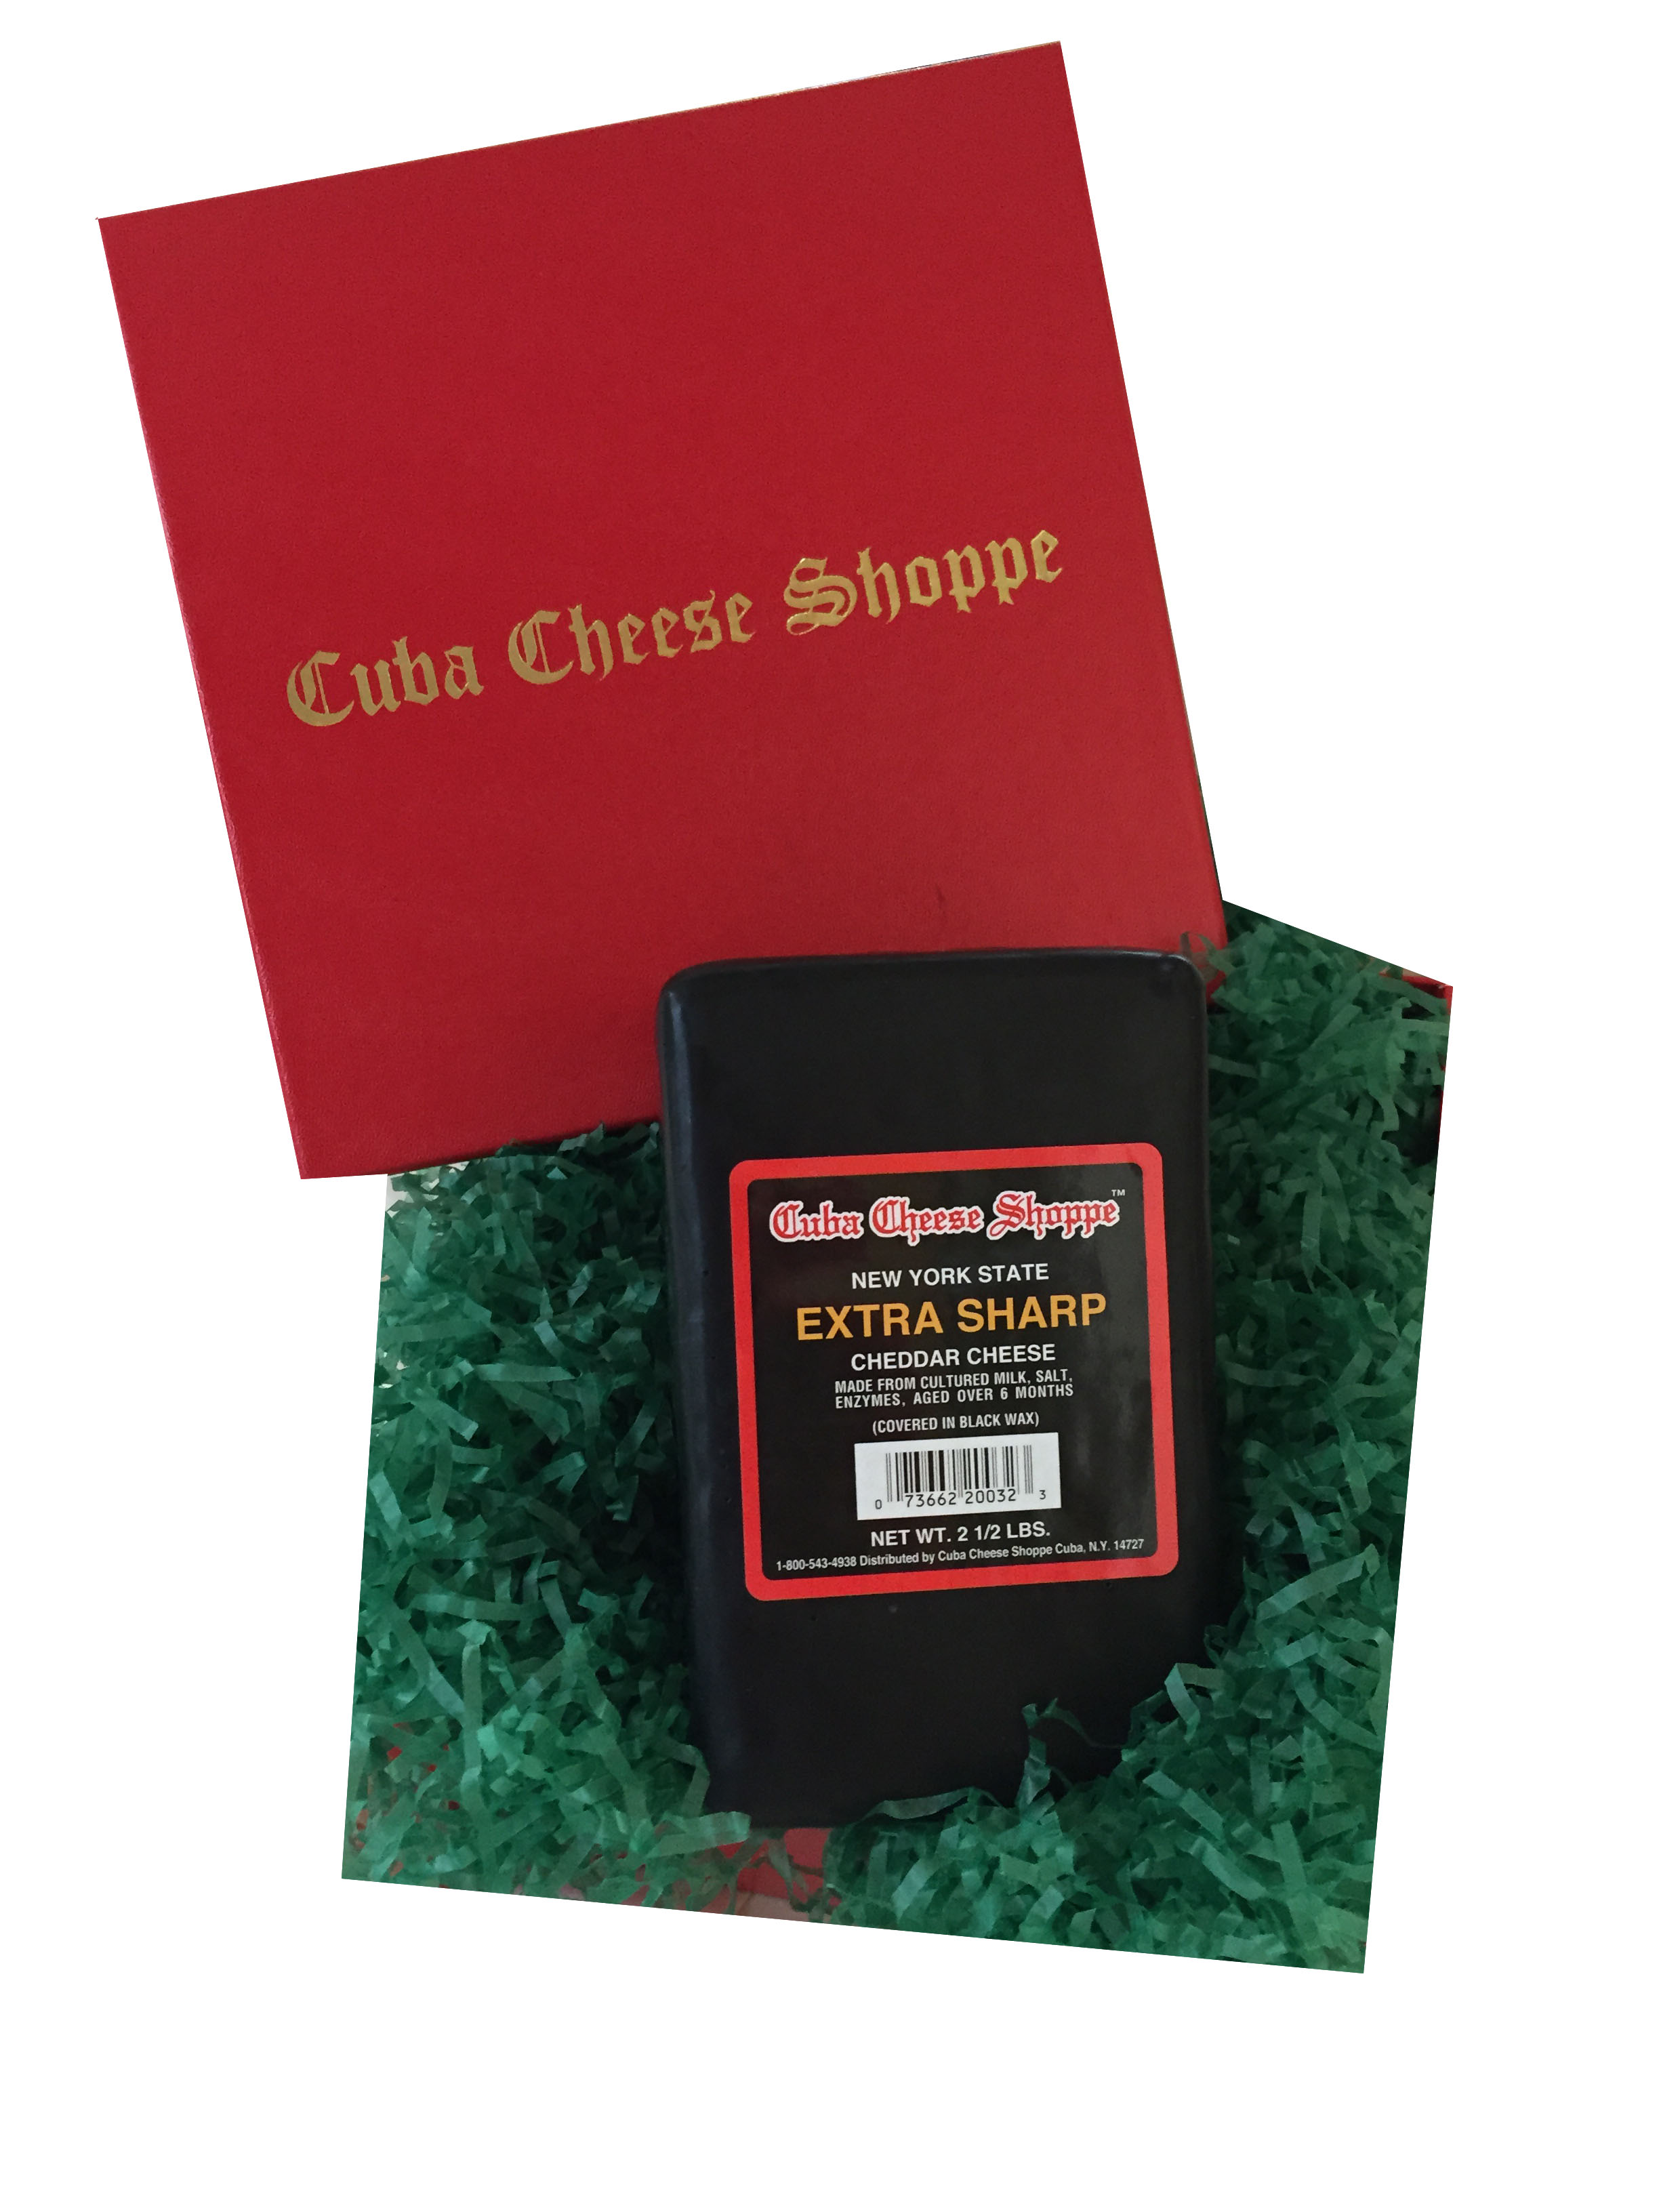 Selskabelig Feje jul Cuba Cheese Shoppe Inc.: 2 1/2 lb. Extra Sharp Black Wax Block in a Red  Gift Box